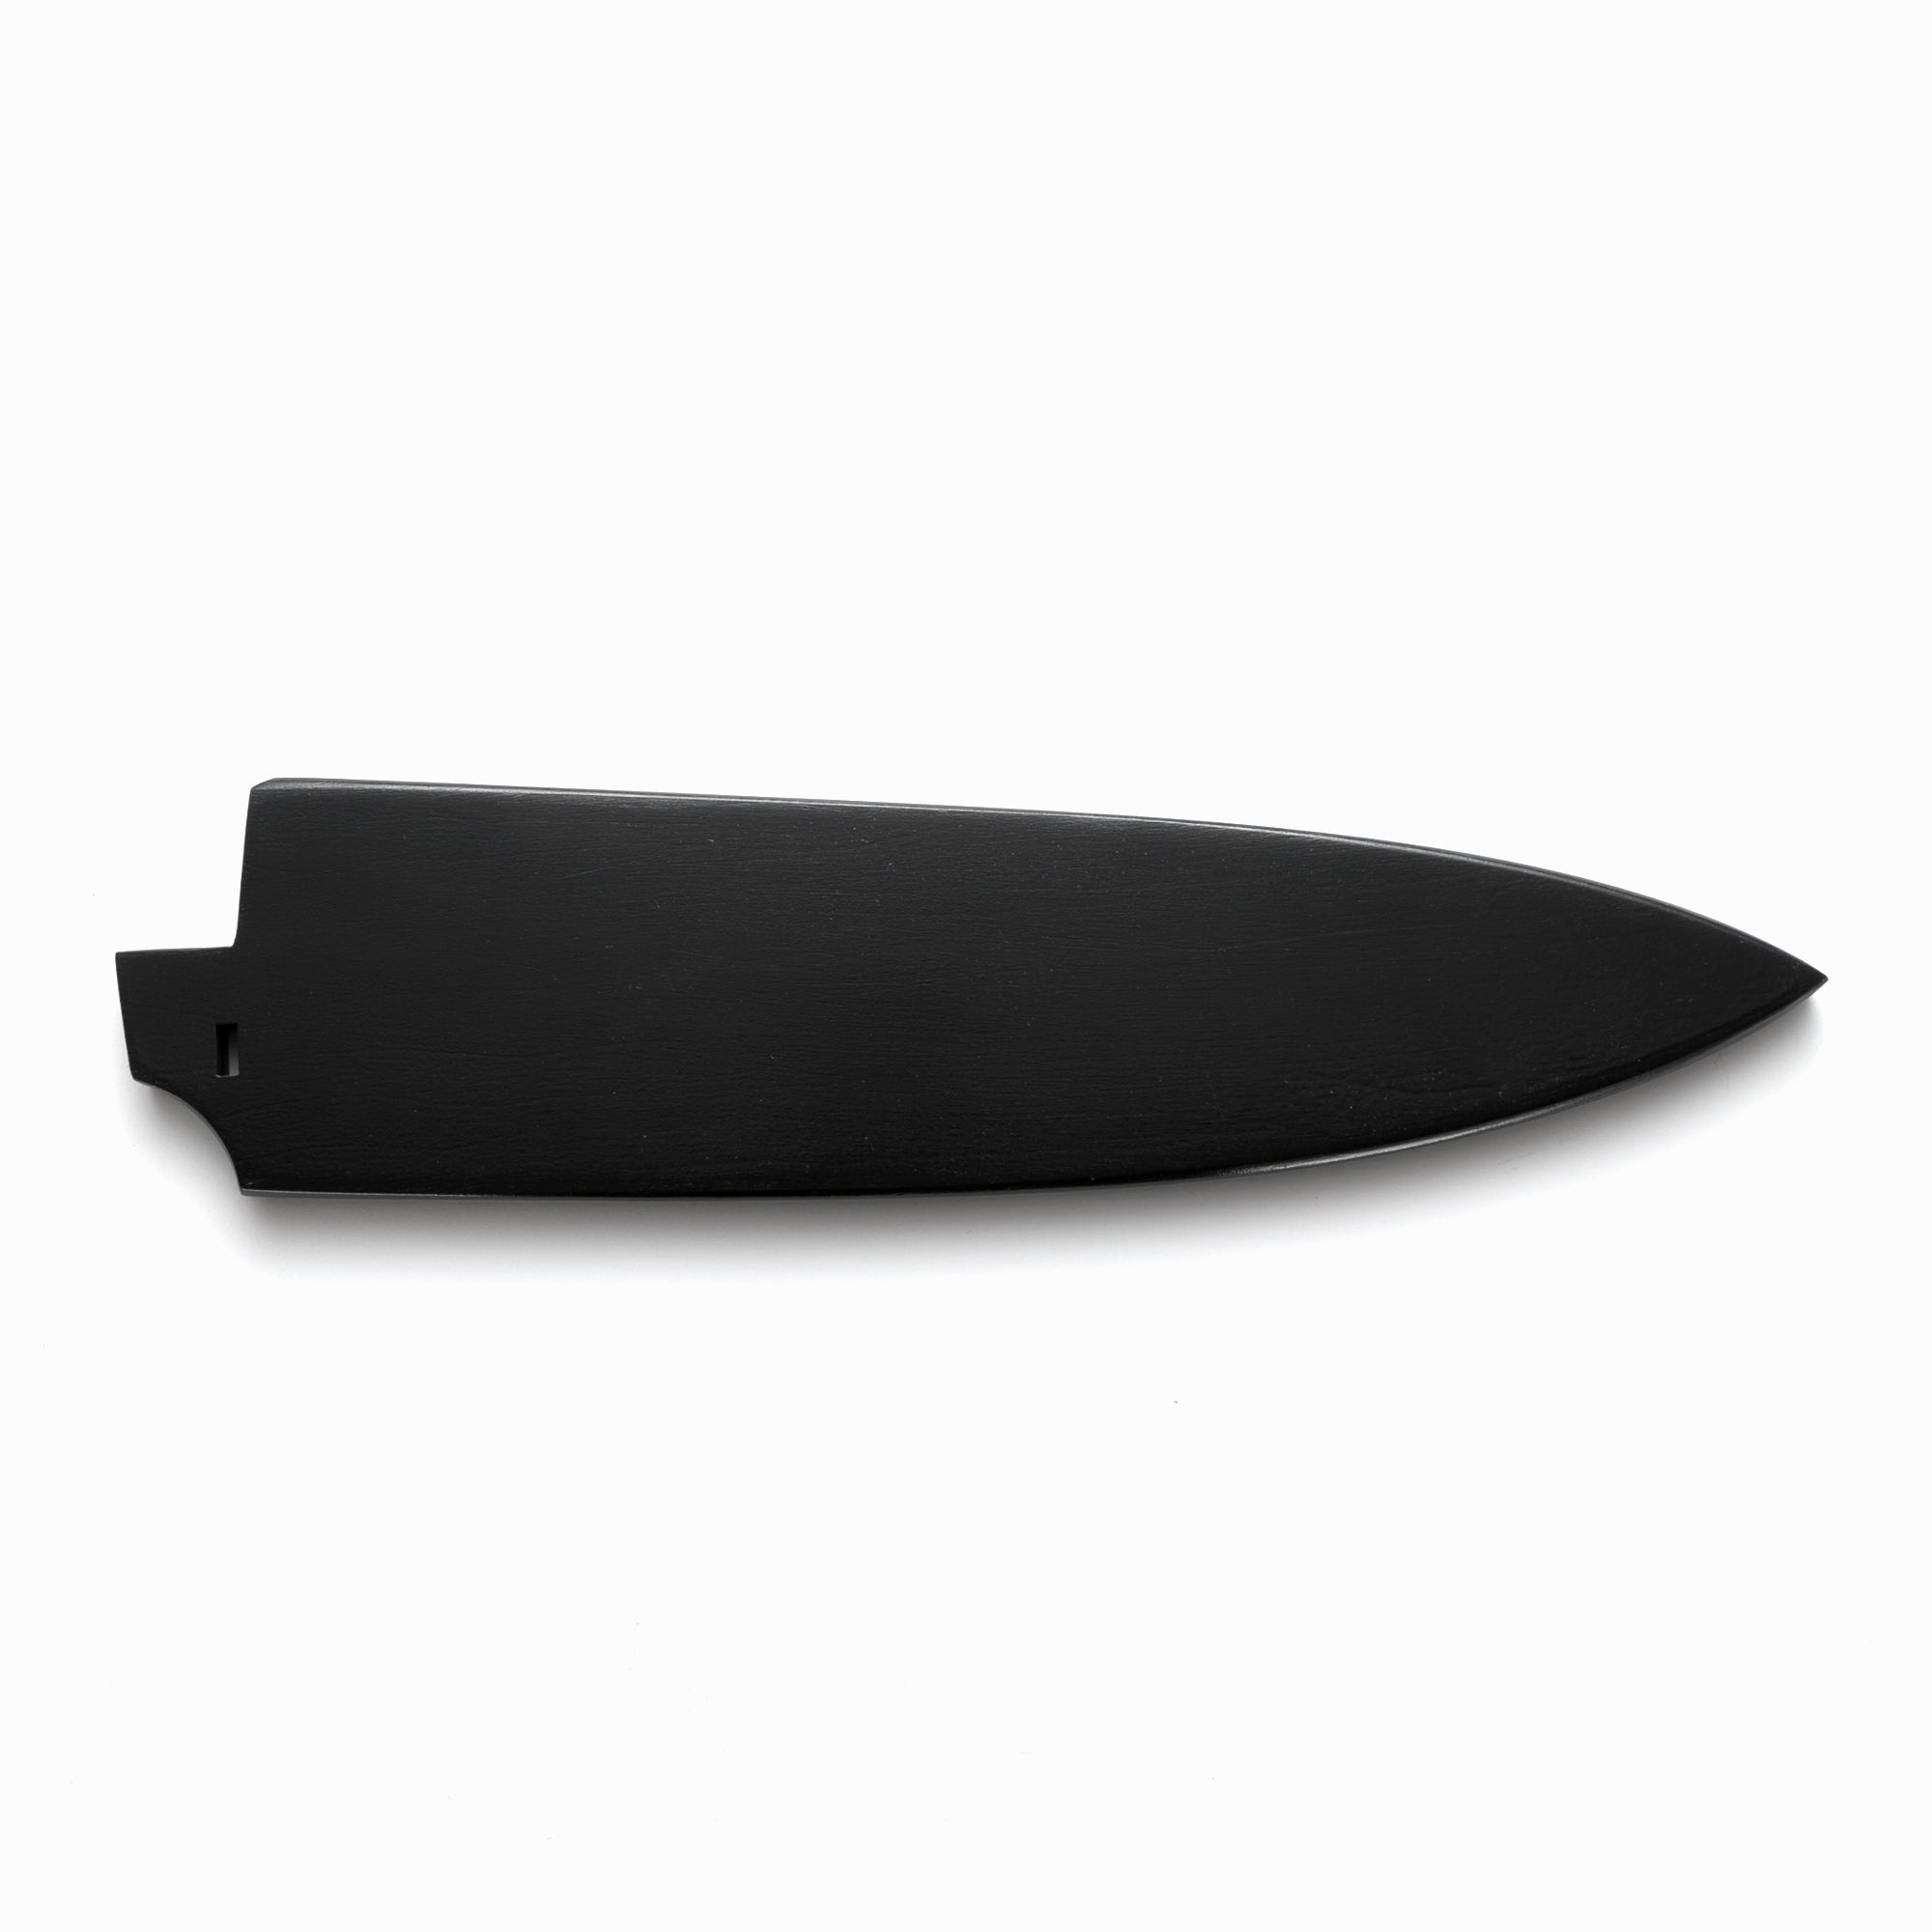 Black wood saya knife sheath for Town Cutler Desert Dawn and Olneya 10" chef knife.